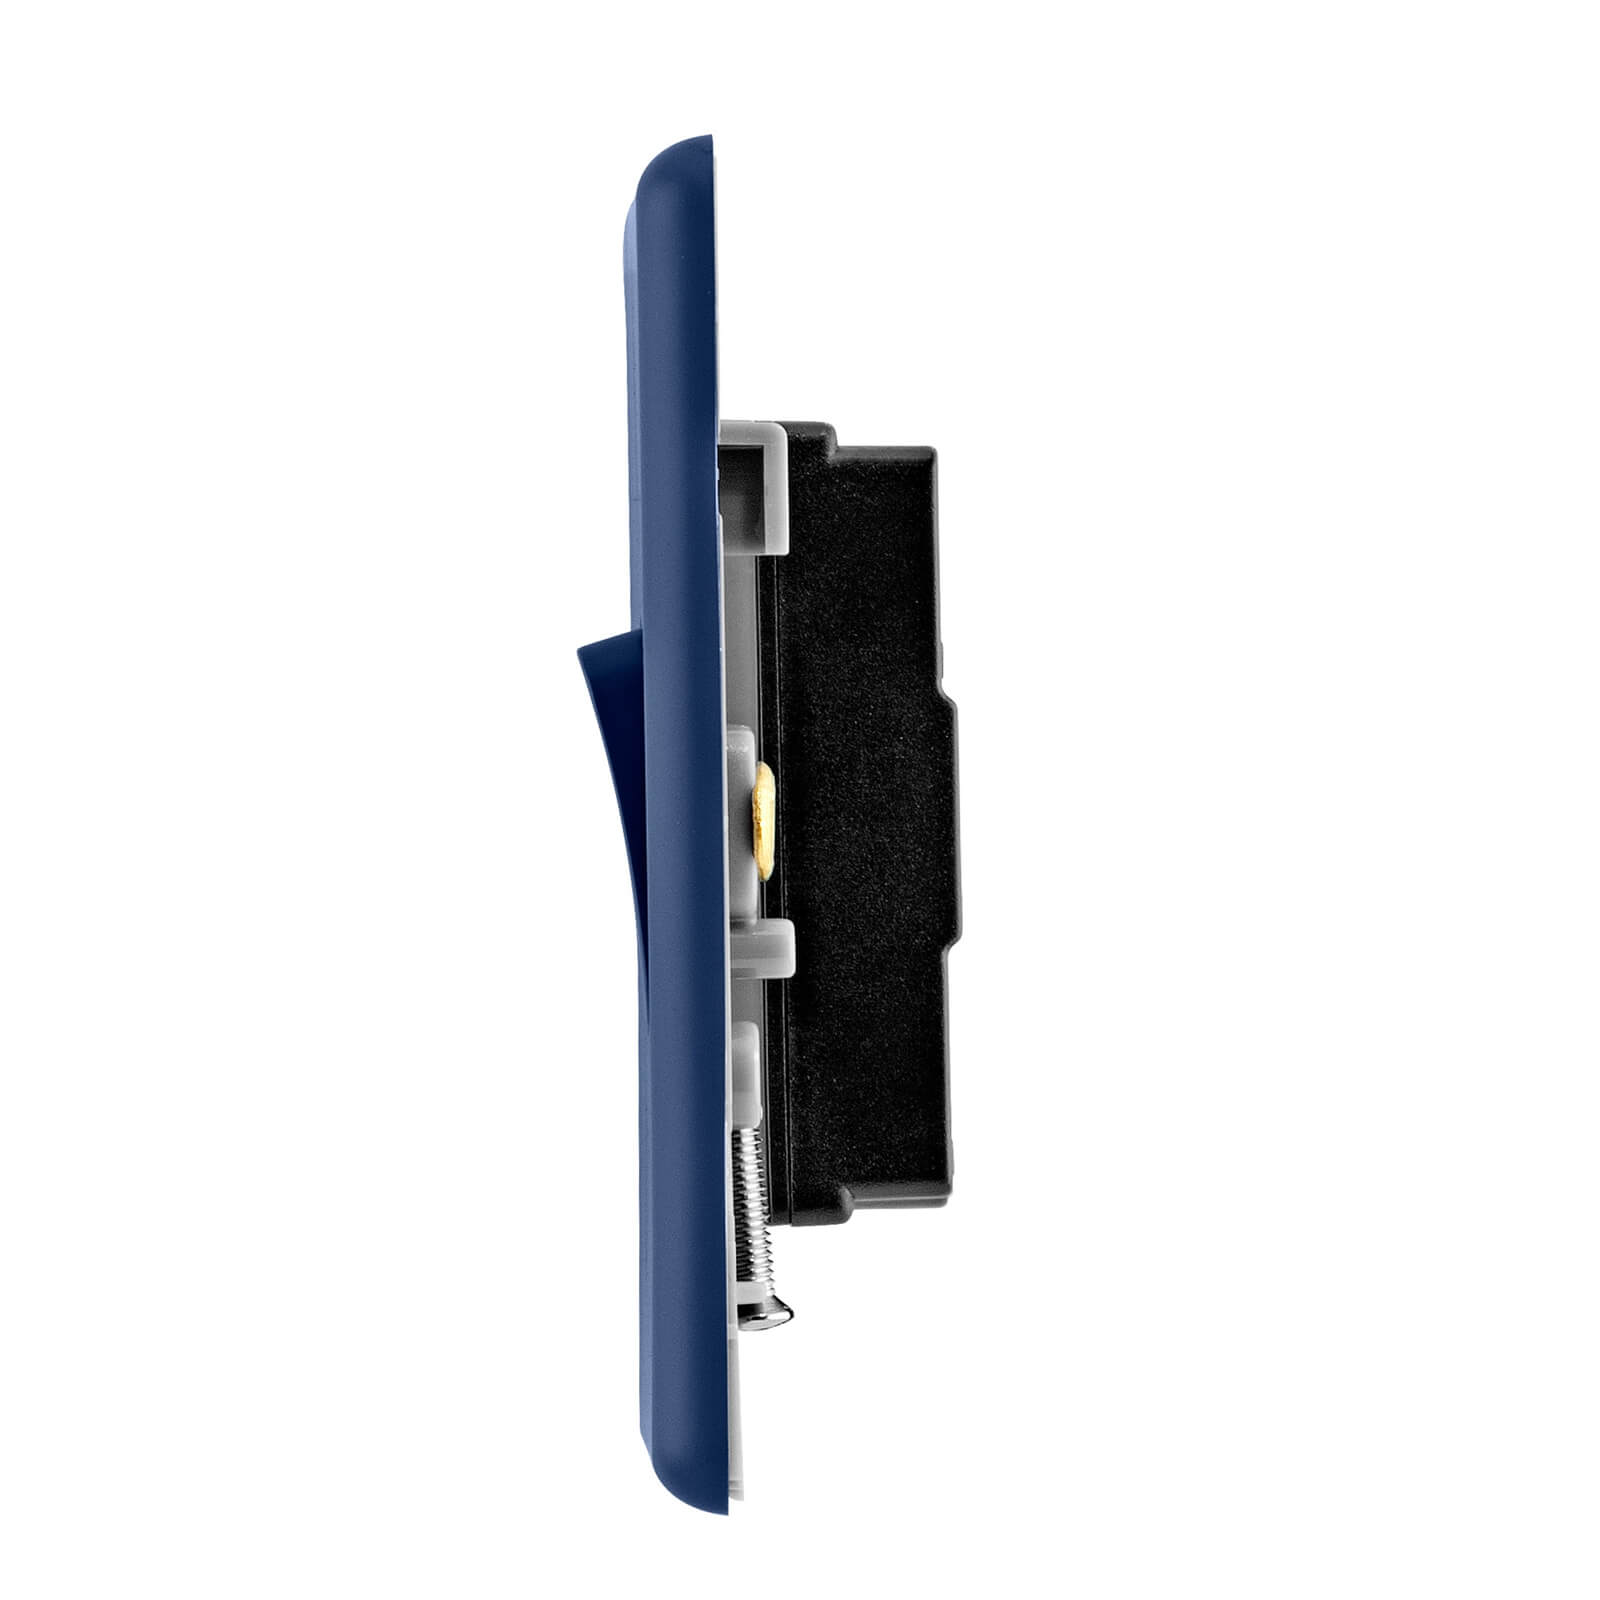 Arlec Rocker 10A 2Gang 2Way Galaxy Blue Double light switch